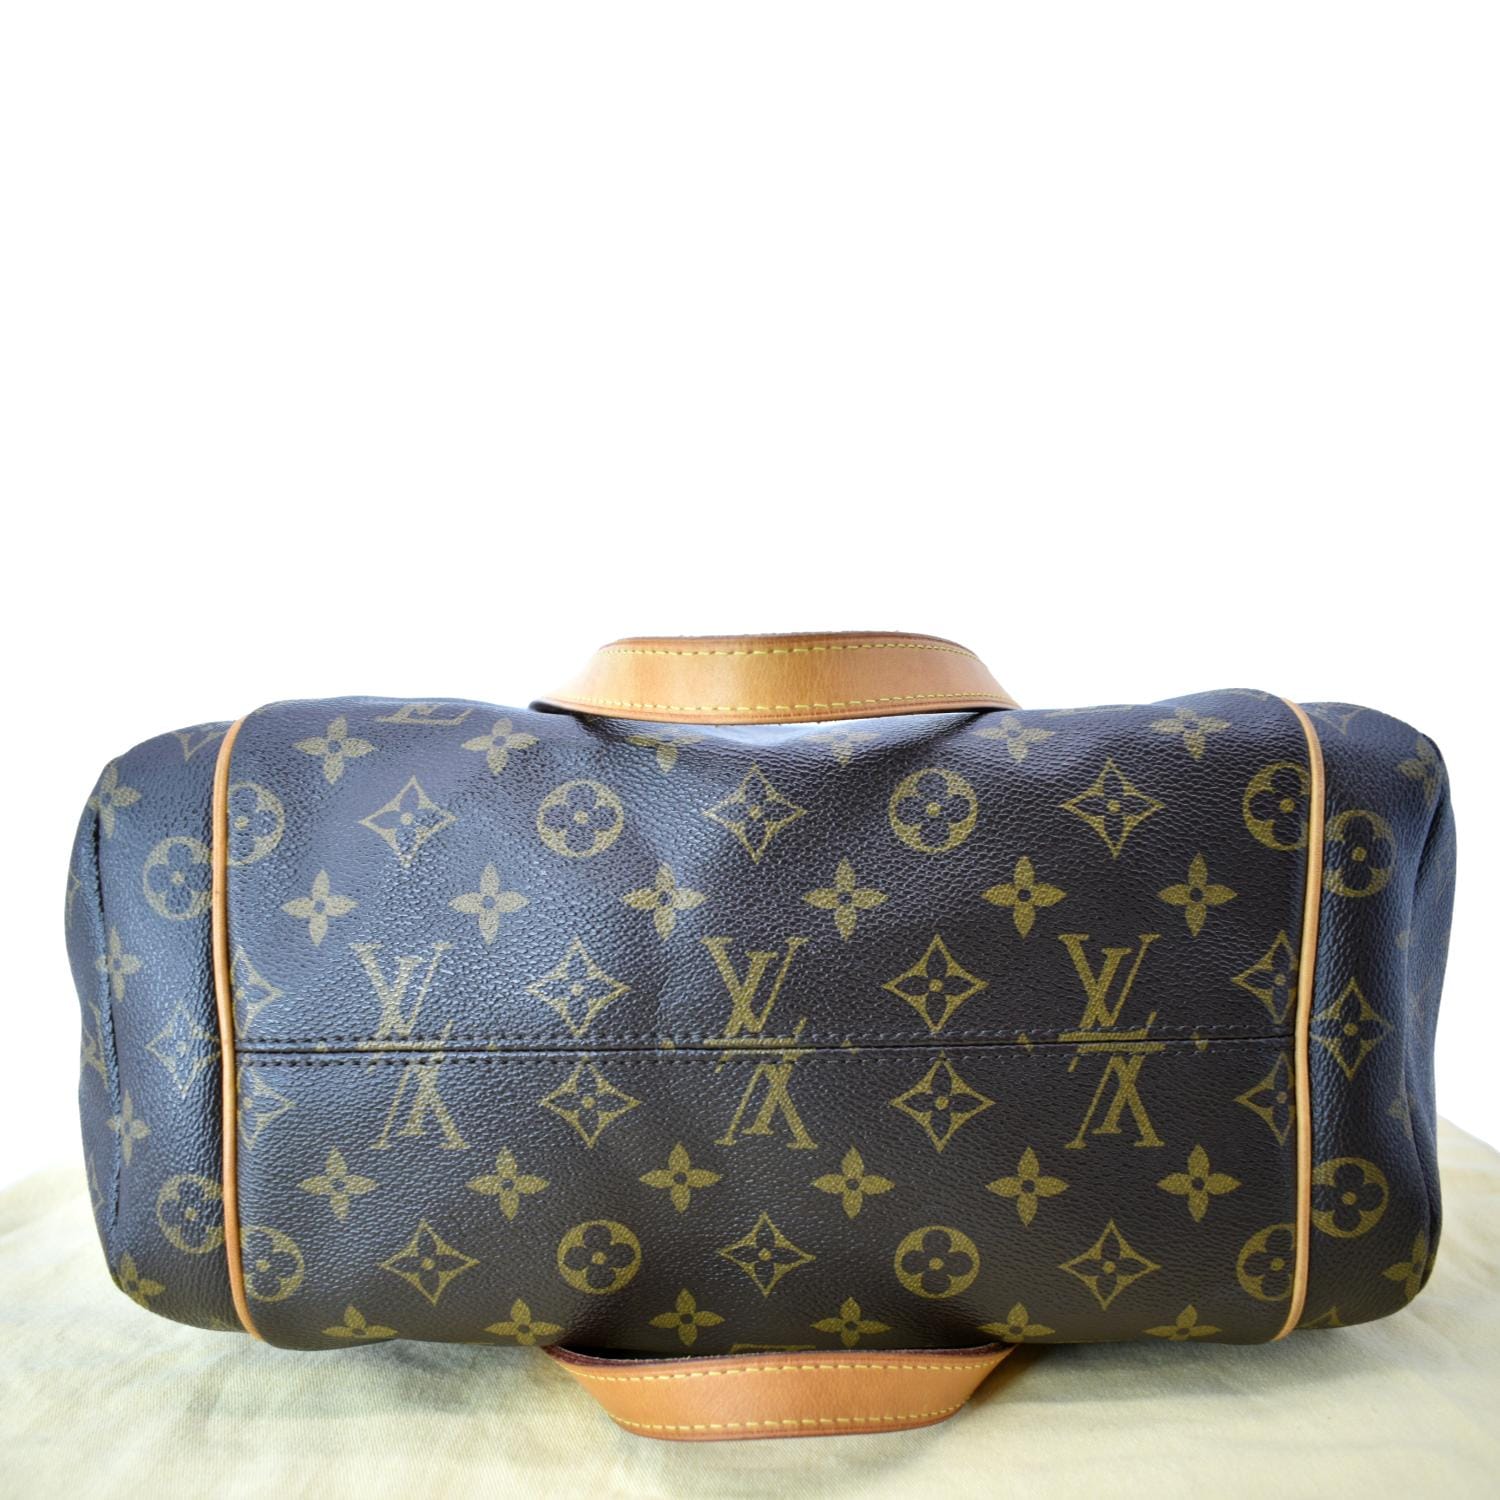 Louis Vuitton, Bags, Beautiful Totally Mm Louis Vuitton